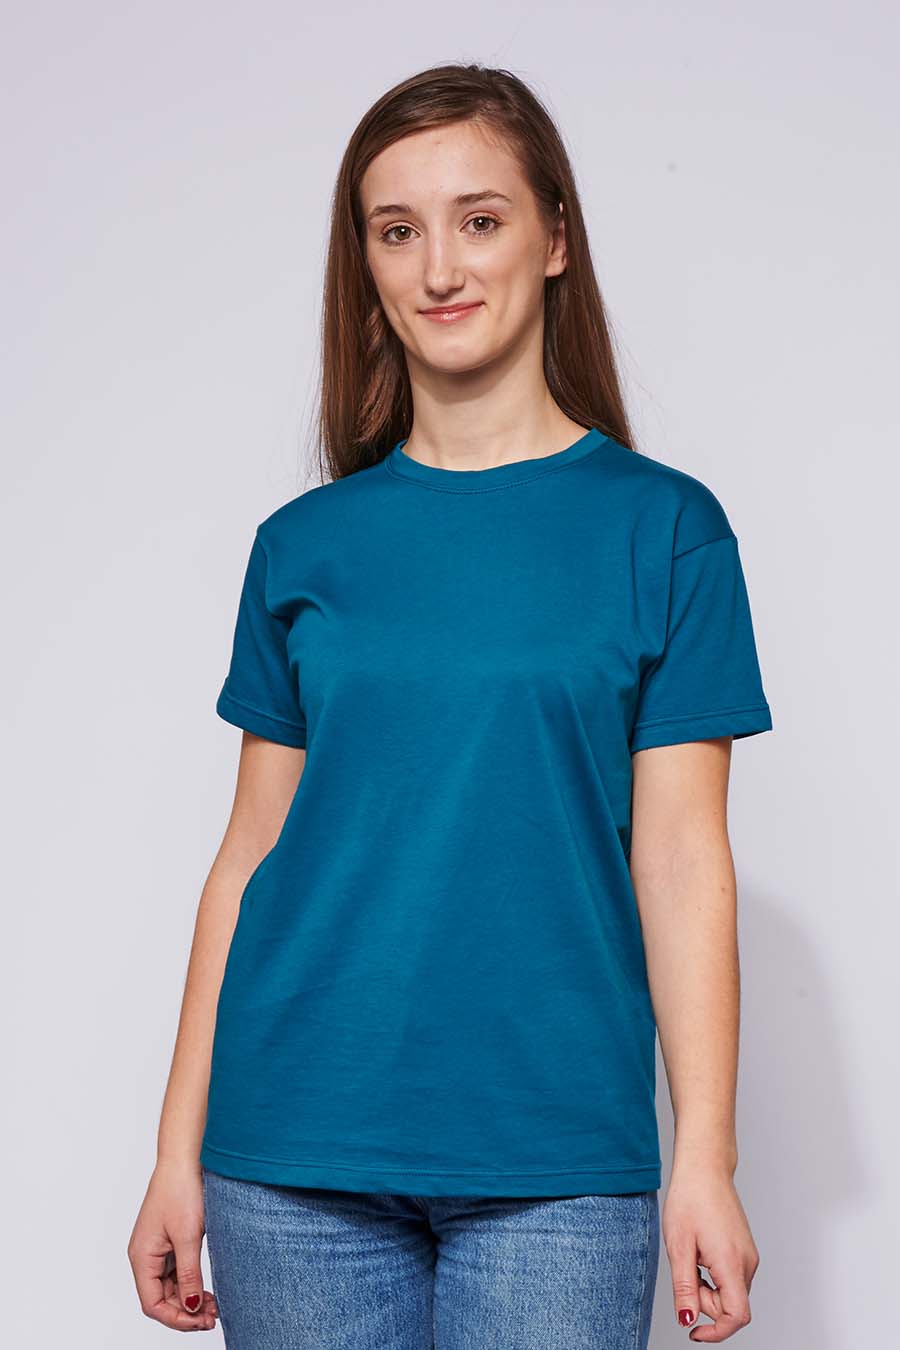 Tee-shirt Femme made in France en coton bio BRIGITTE pétrole - FIL ROUGE